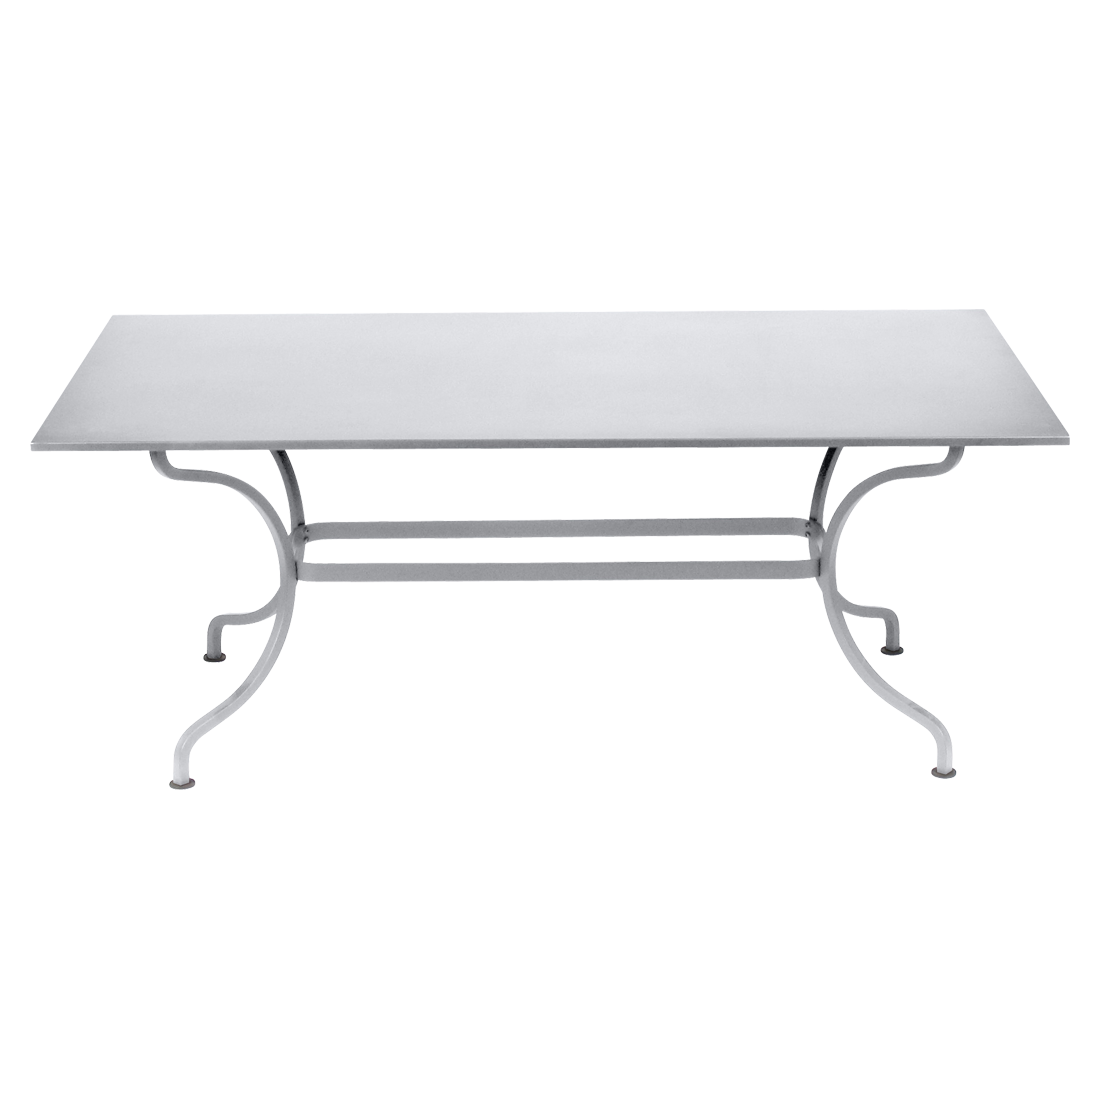 table de jardin, table metal, table rectangulaire, table 8 personnes, table blanche